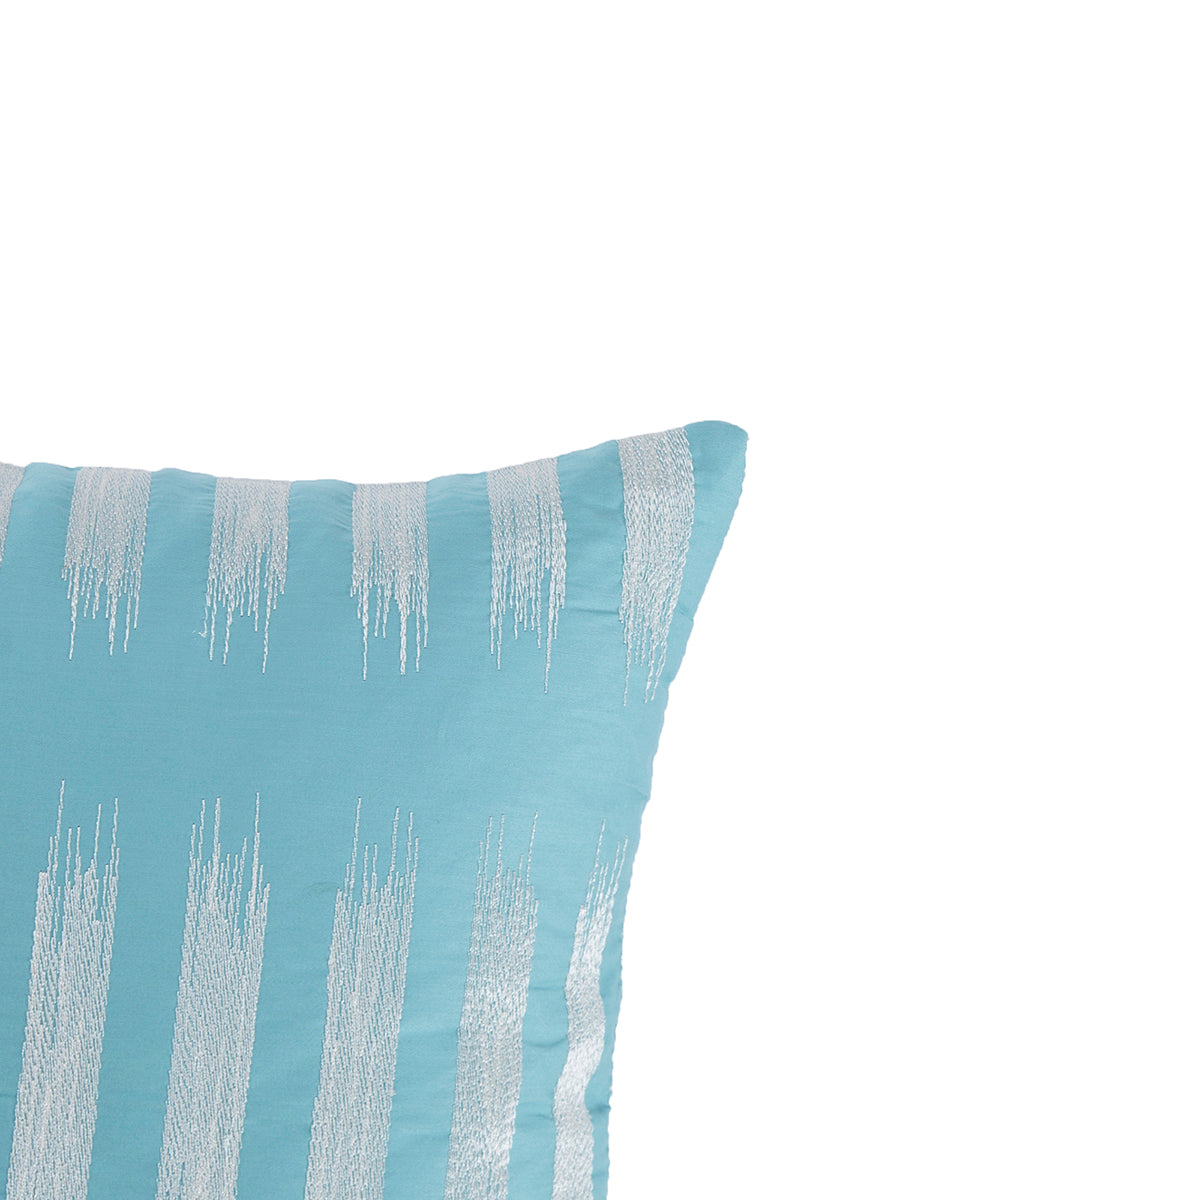 Alto Blue Medium 45X45 Cm Embroidery Machine Cushion Cover